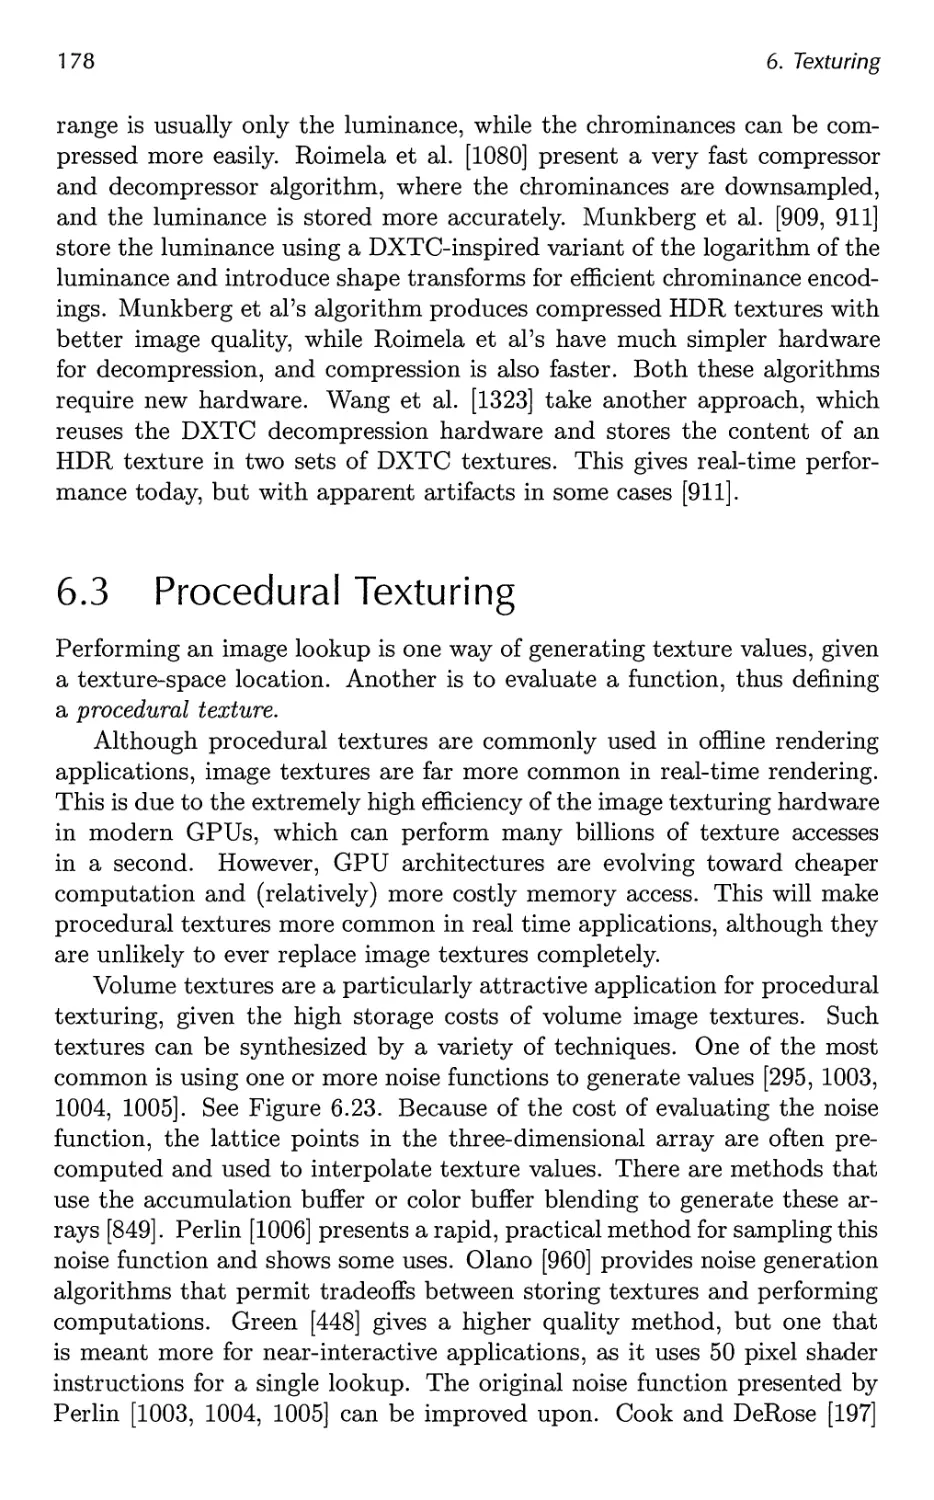 6.3 Procedural Texturing